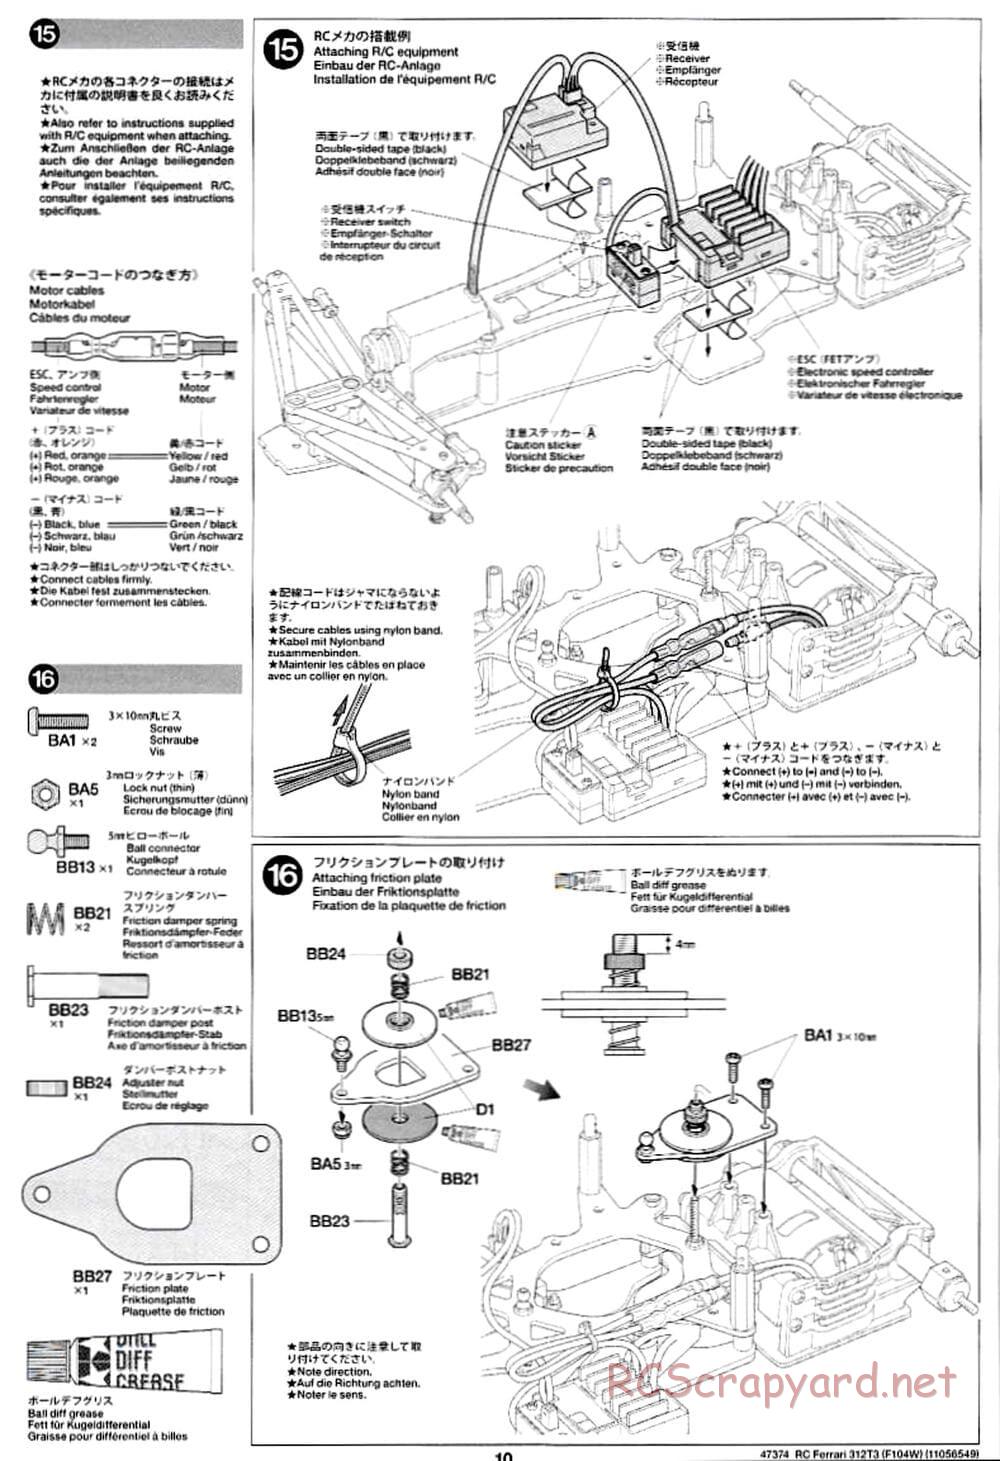 Tamiya - Ferrari 312T3 - F104W Chassis - Manual - Page 10